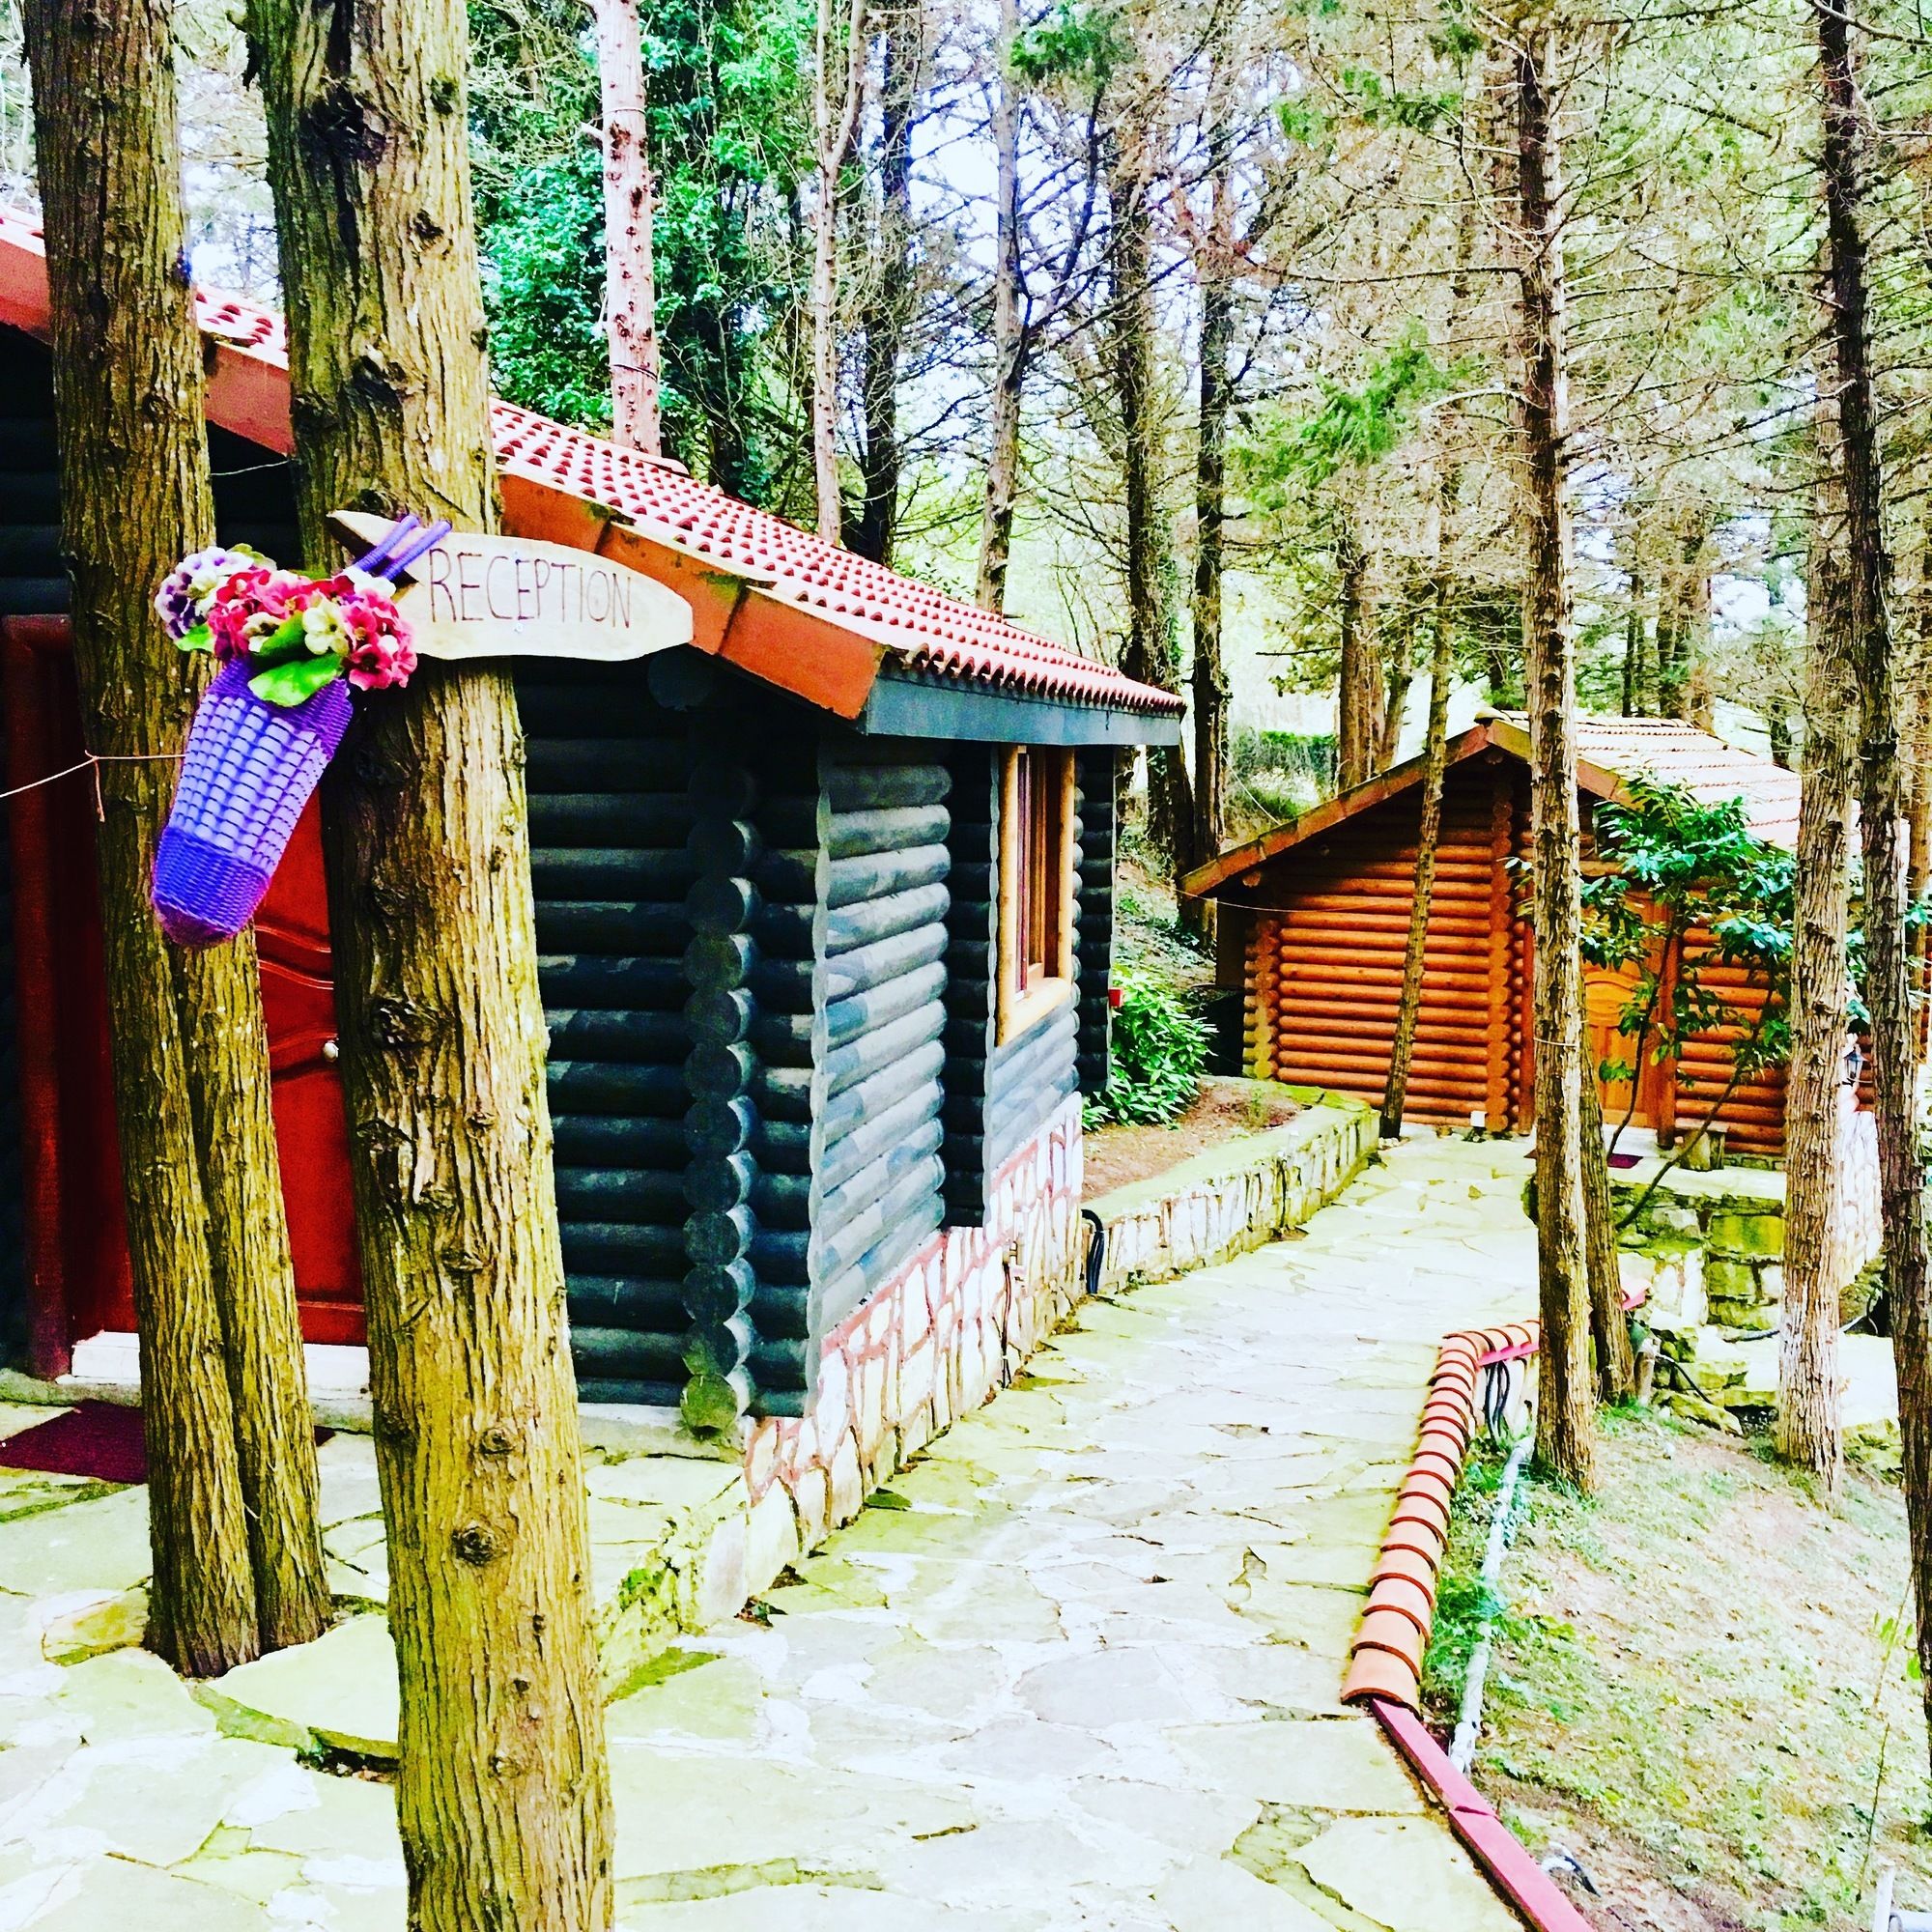 Ağva Orman Evleri Forest Lodge (Agva Orman Evleri Forest Lodge)